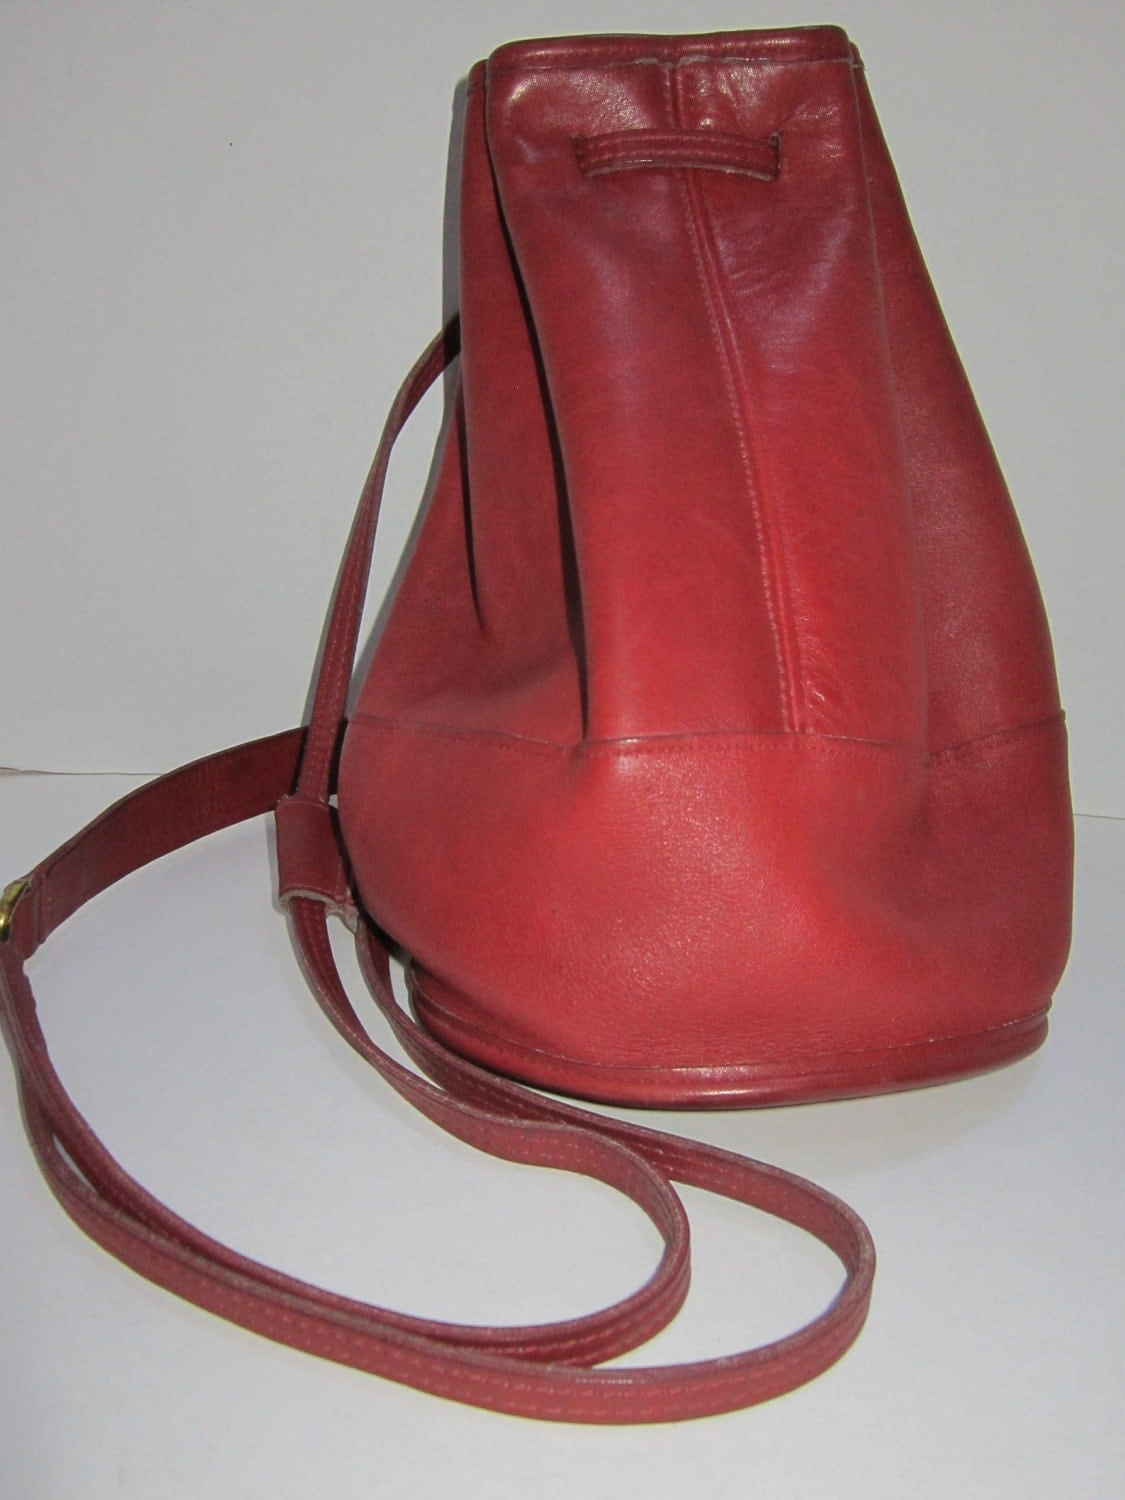 Vintage Coach red leather backpack/handbag by dejavuvintageretro